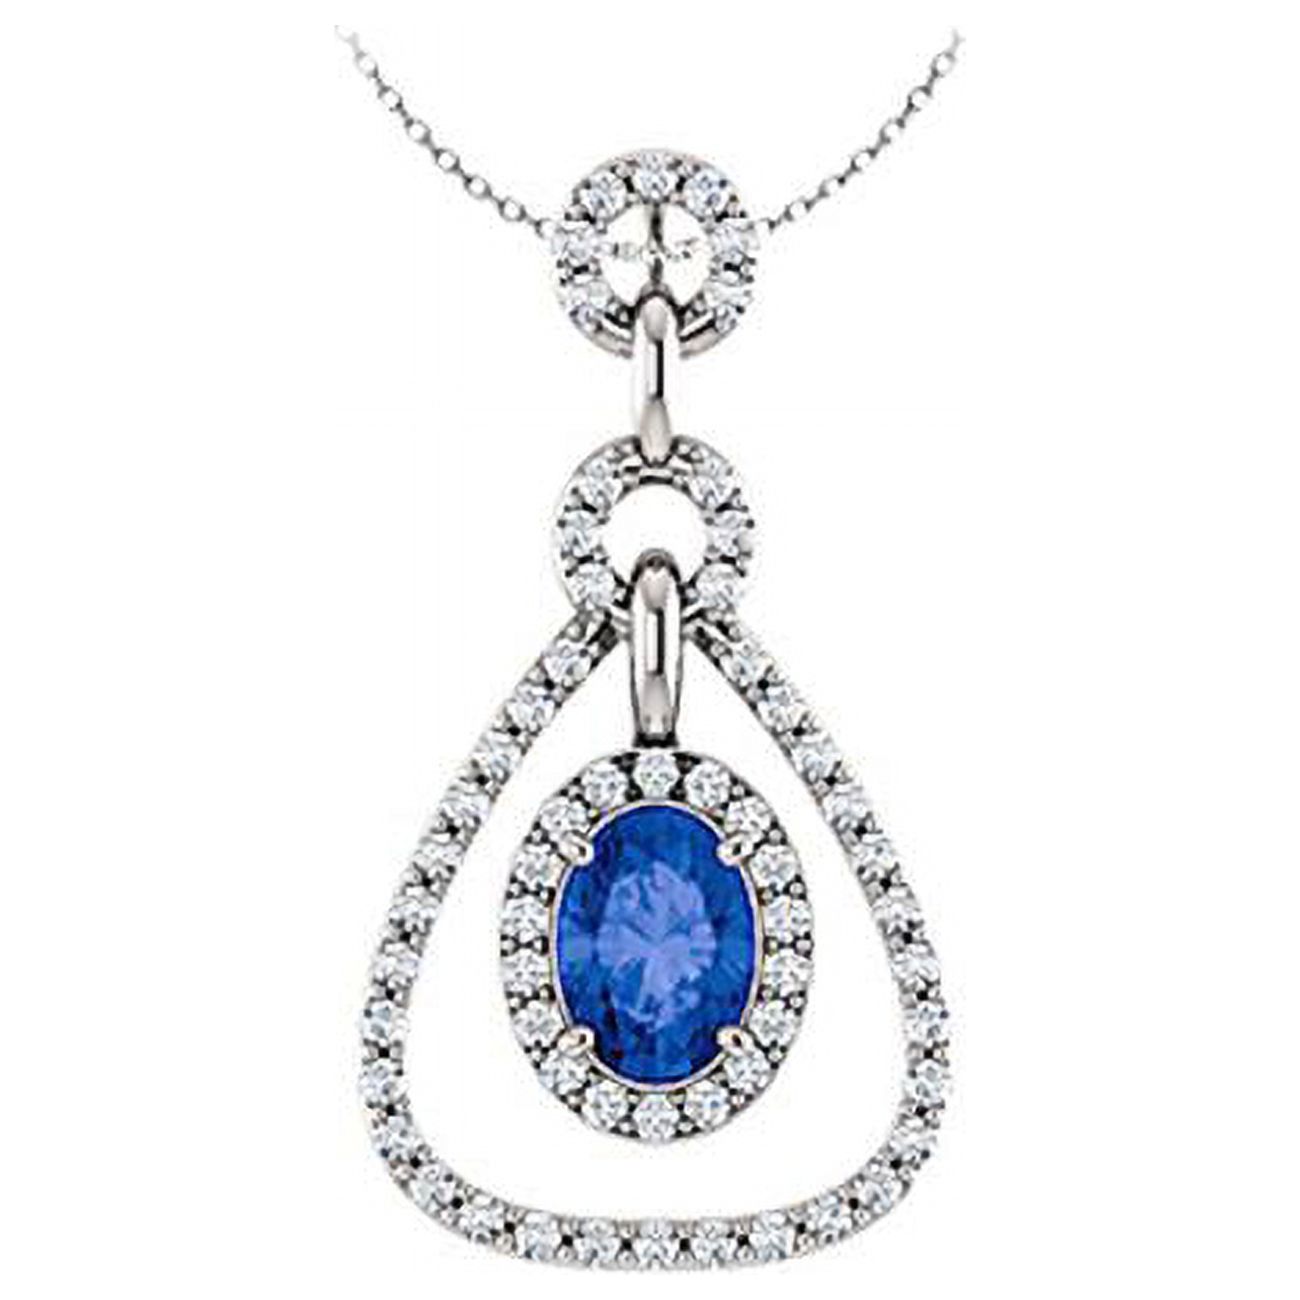 Fine Jewelry Vault UBUPDSOV85435W14CZS September Birthstone Created Sapphire and CZ Tear Drop Halo Pendant 14K White Gold 1.50 CT TGW - image 1 of 1